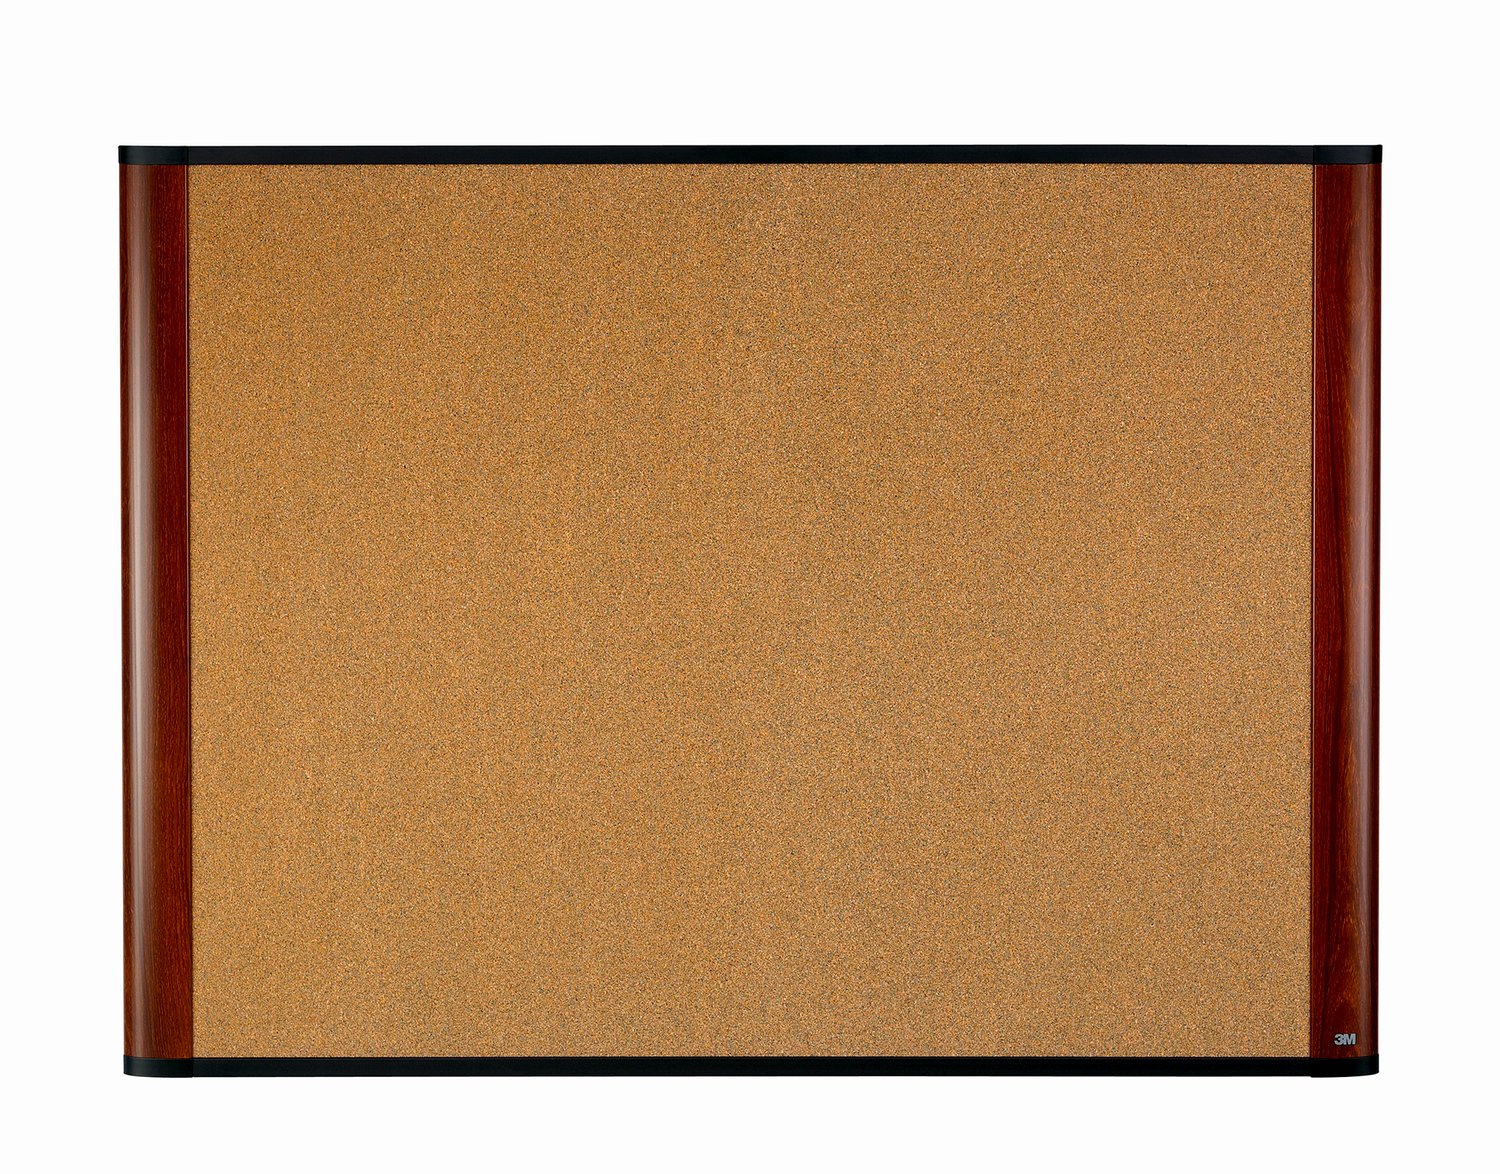 7010295026 - 3M Cork Board C4836MY, 48 in x 36 in x 1 in (121.9 cm x 91.4 cm x 2.5
cm) Mahogany Finish Frame